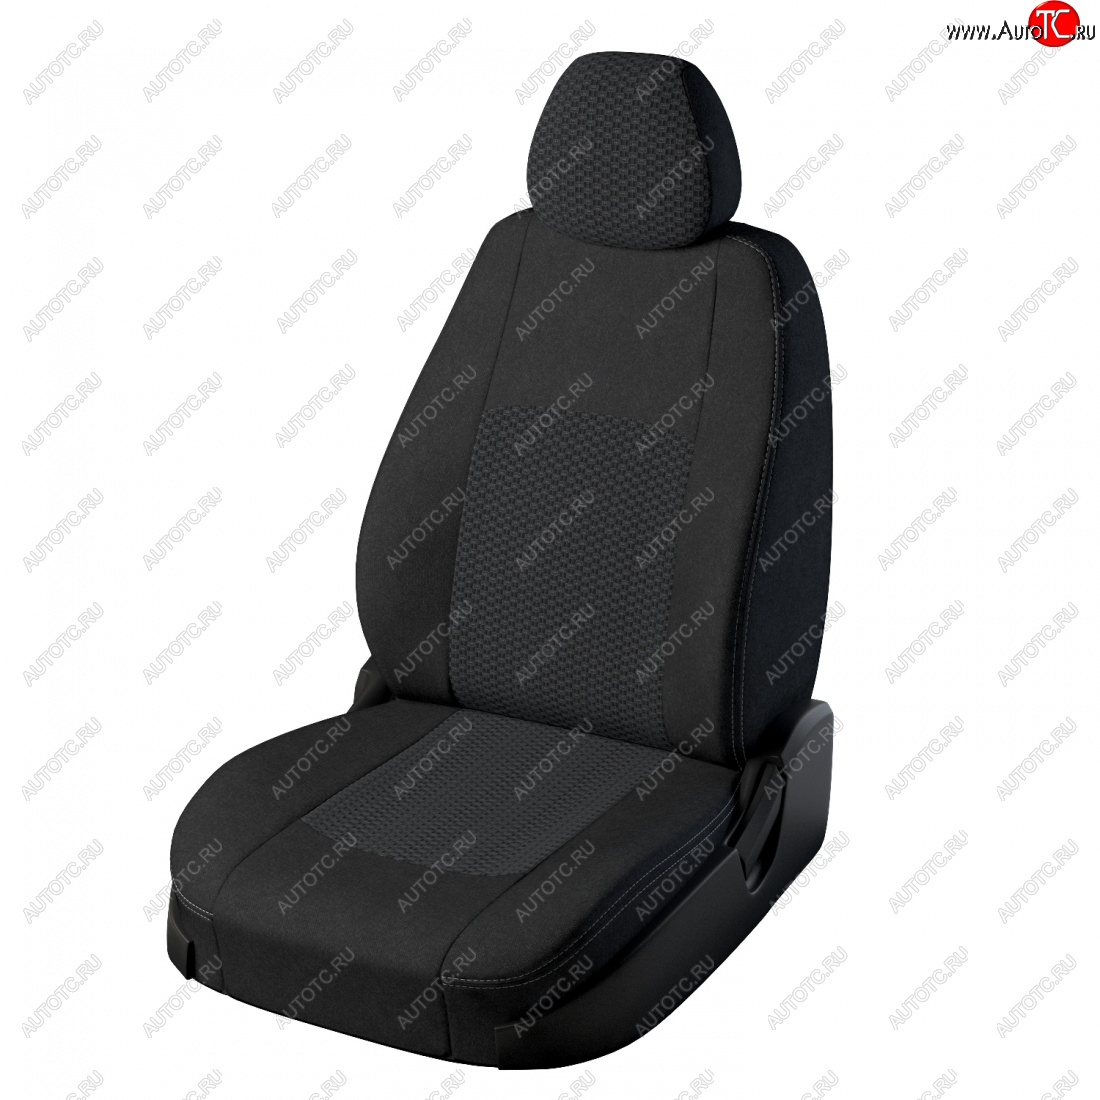 4 799 р. Чехлы для сидений Lord Autofashion Турин (жаккард) Hyundai Sonata EF рестайлинг ТагАЗ (2001-2013) (Чёрный, вставка Вега)